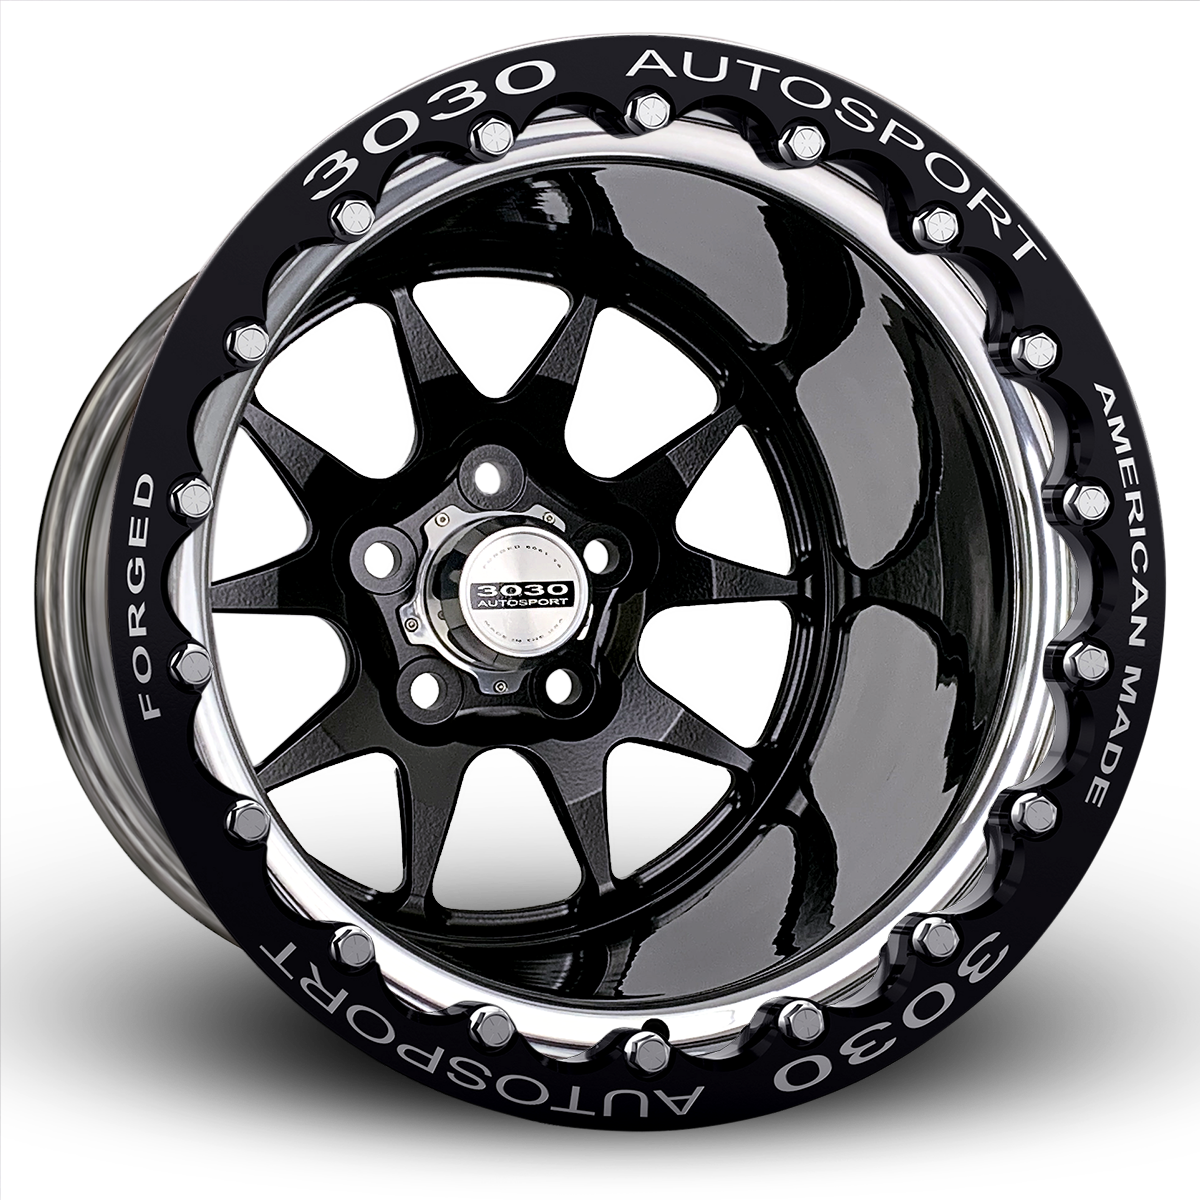 MACH-10 Double-Beadlock Wheel, Size: 15x9", Bolt Pattern: 5x5", Backspace: 6" [Black/Polished]